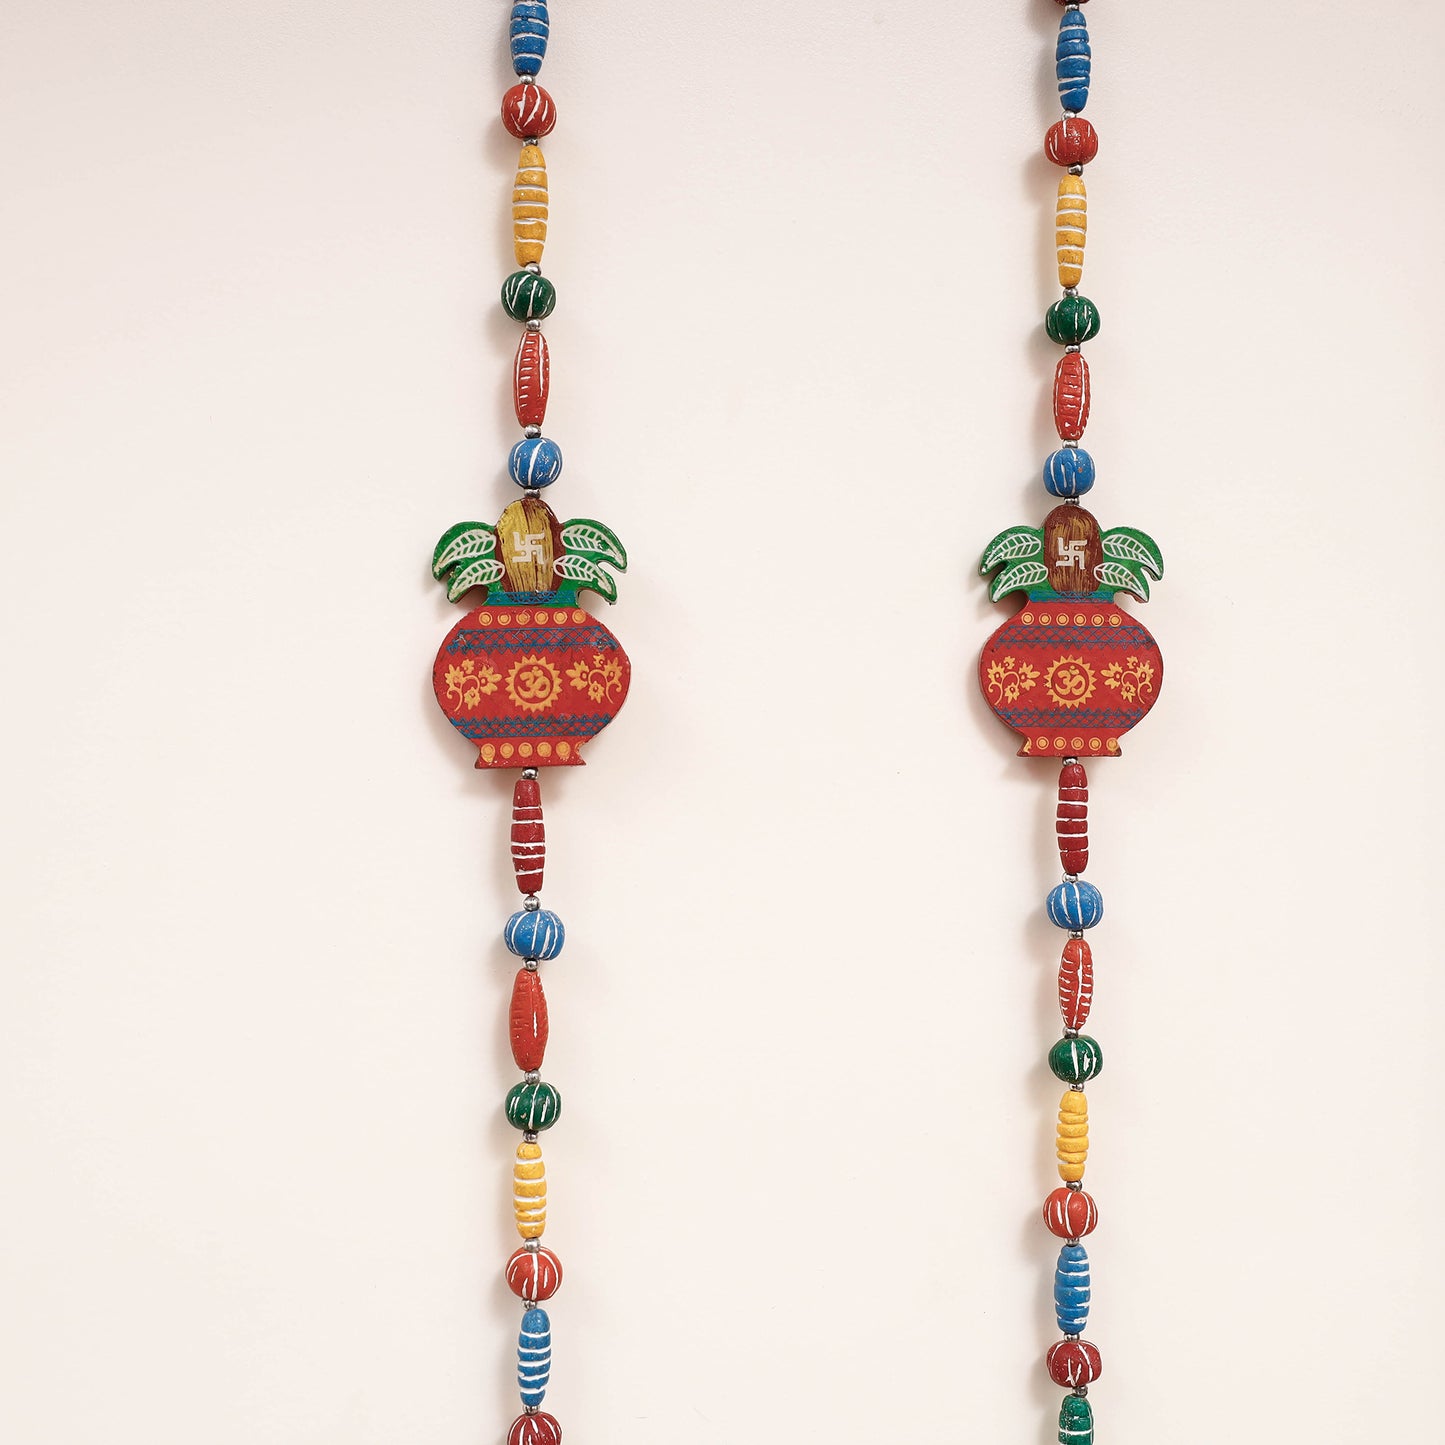  Terracotta Beads Decorative Hanging